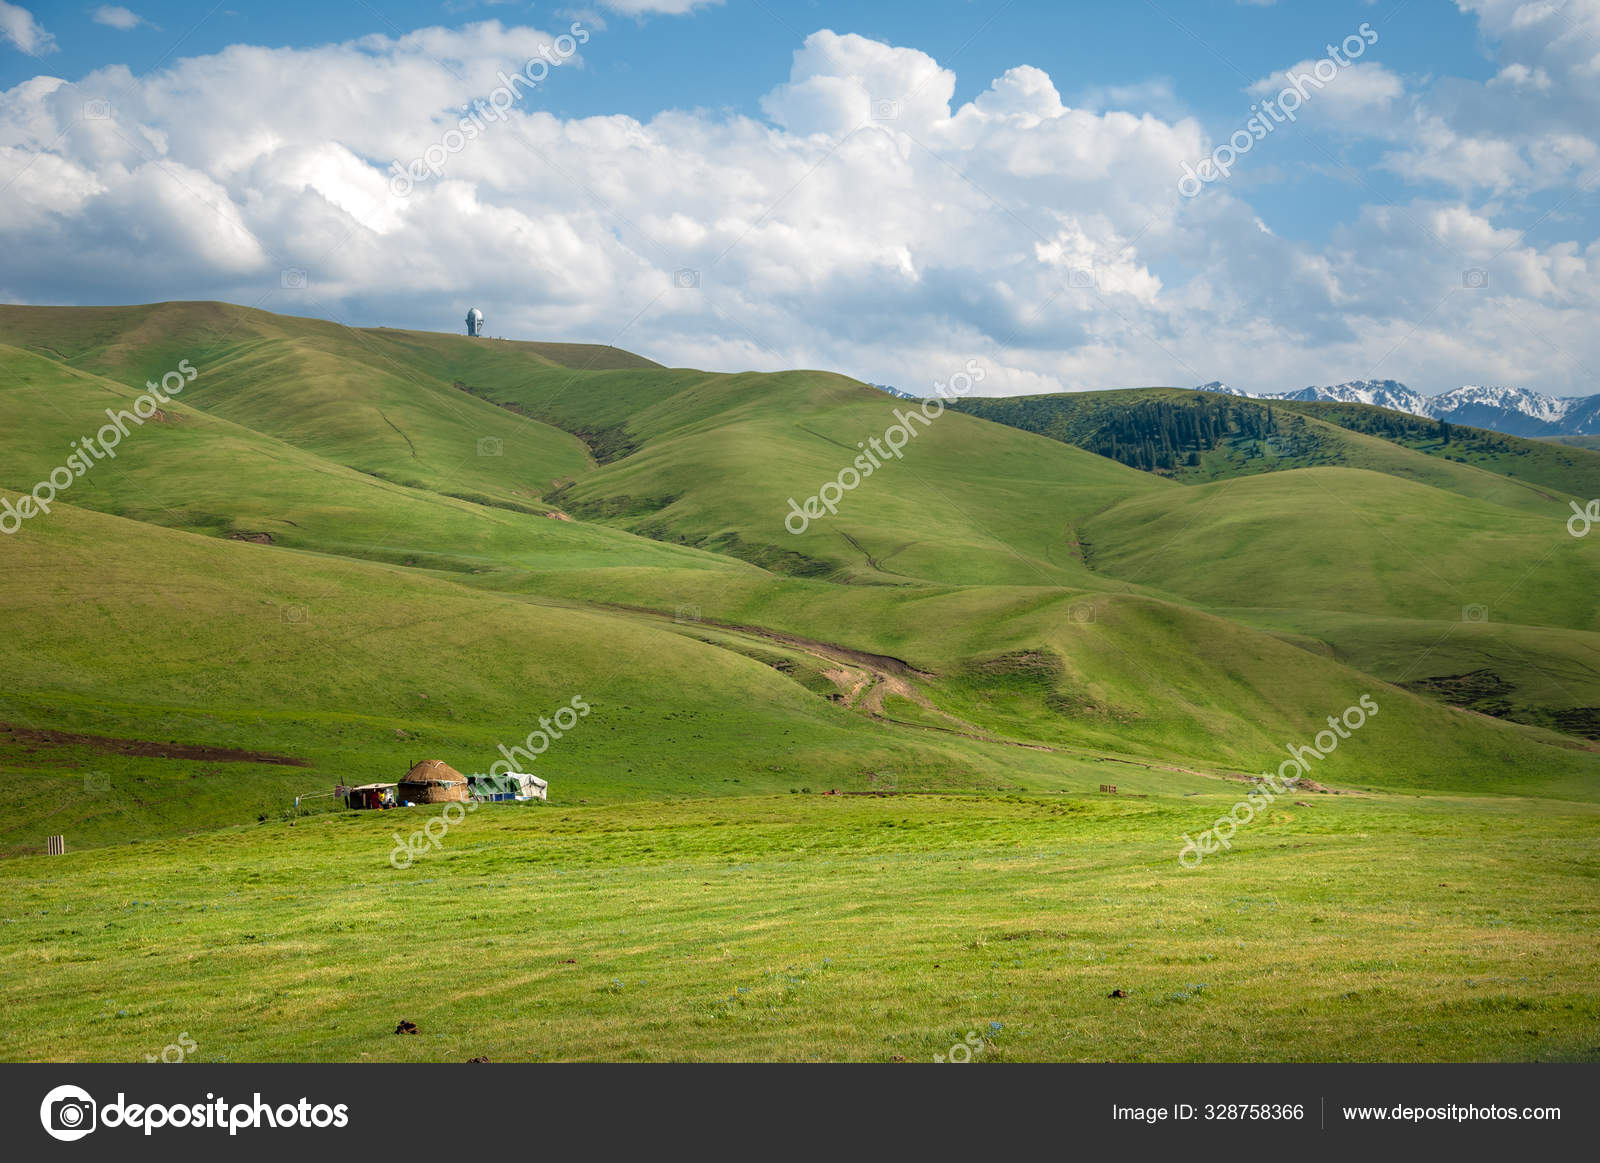 Mountain, mount, hill — Stock Photo © ekina1 #328758366